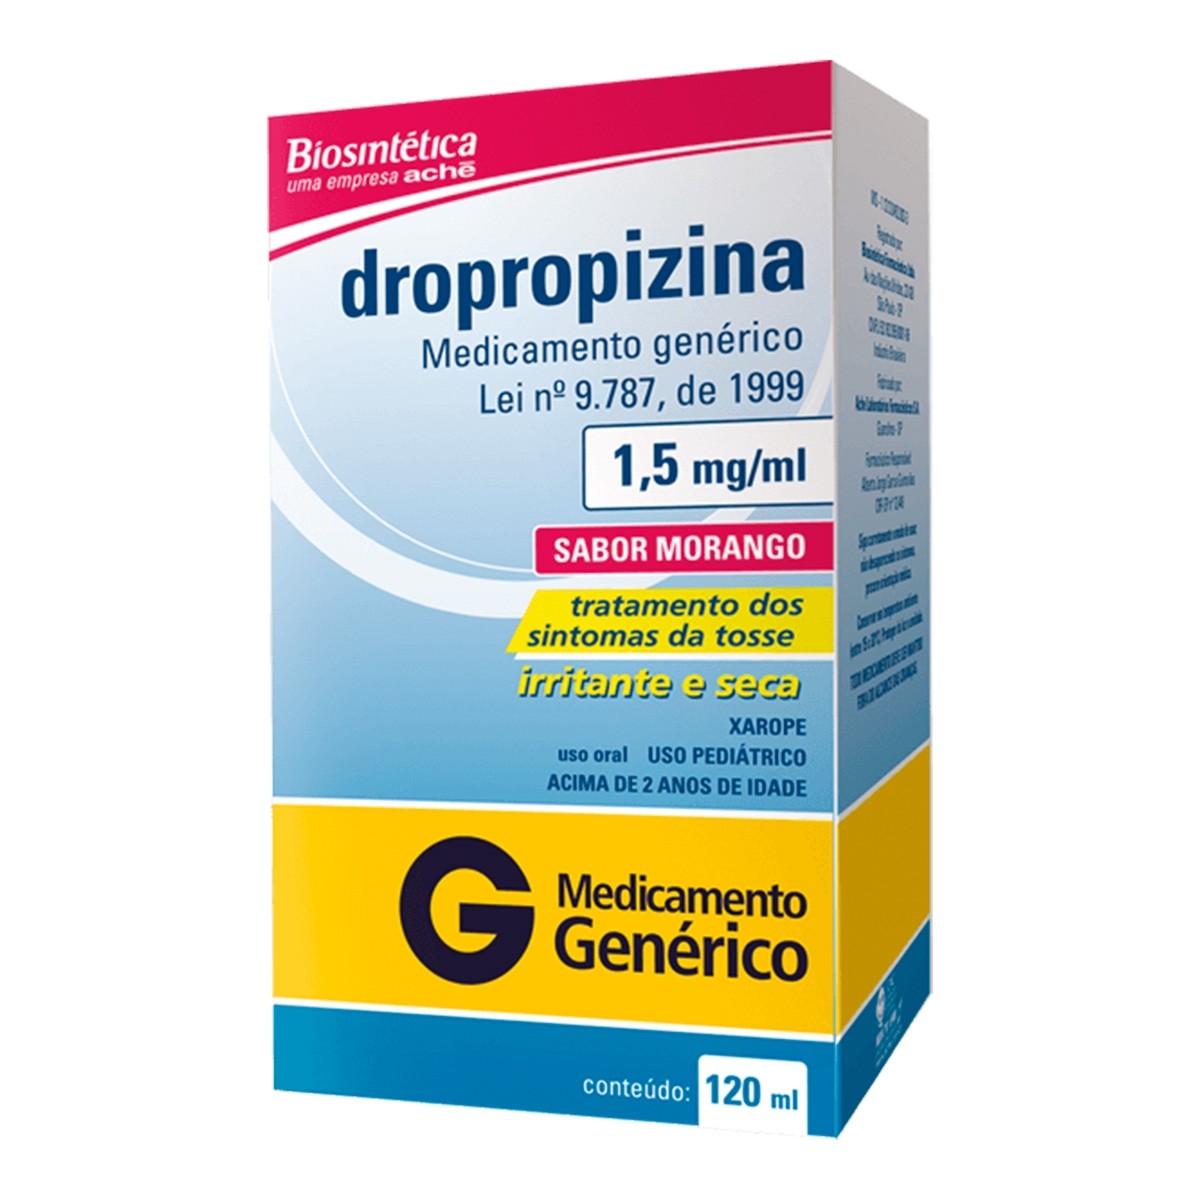 Dropropizina Xarope 3,0mg/ml Genérico Biosintética 120ml